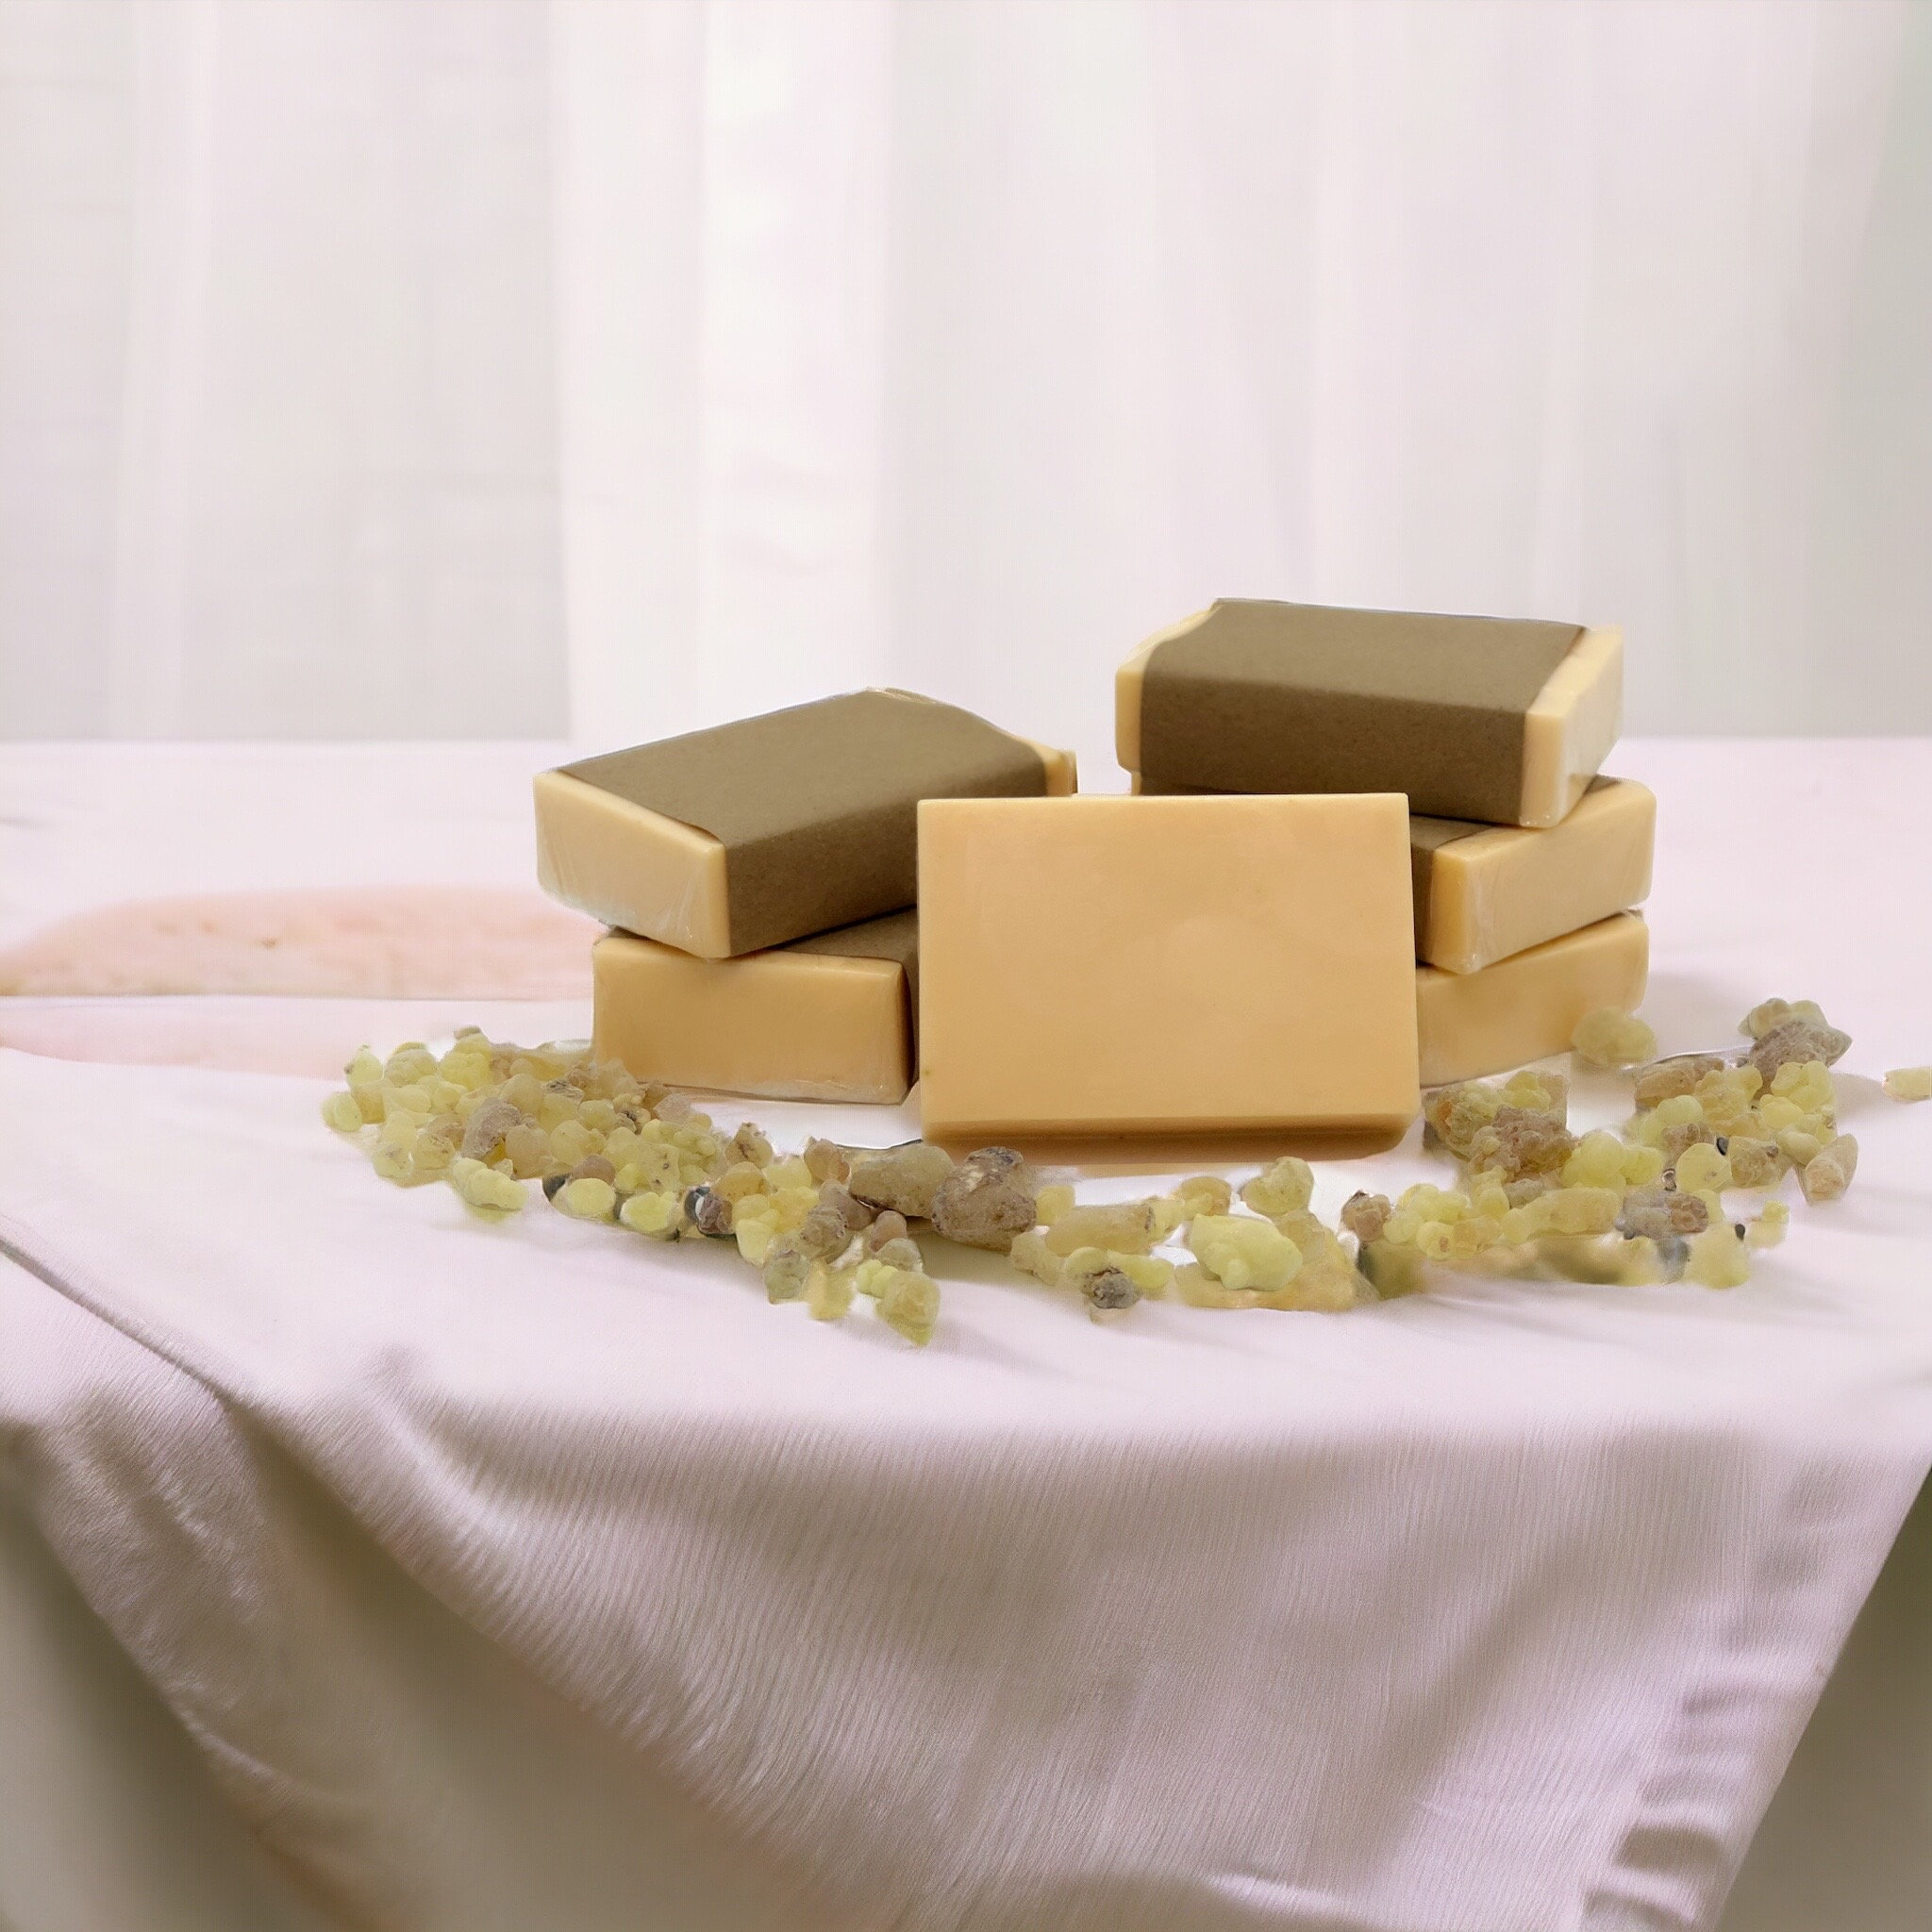 Frankincense & Myrrh Handcrafted Bar Soap - certified organic ingredients